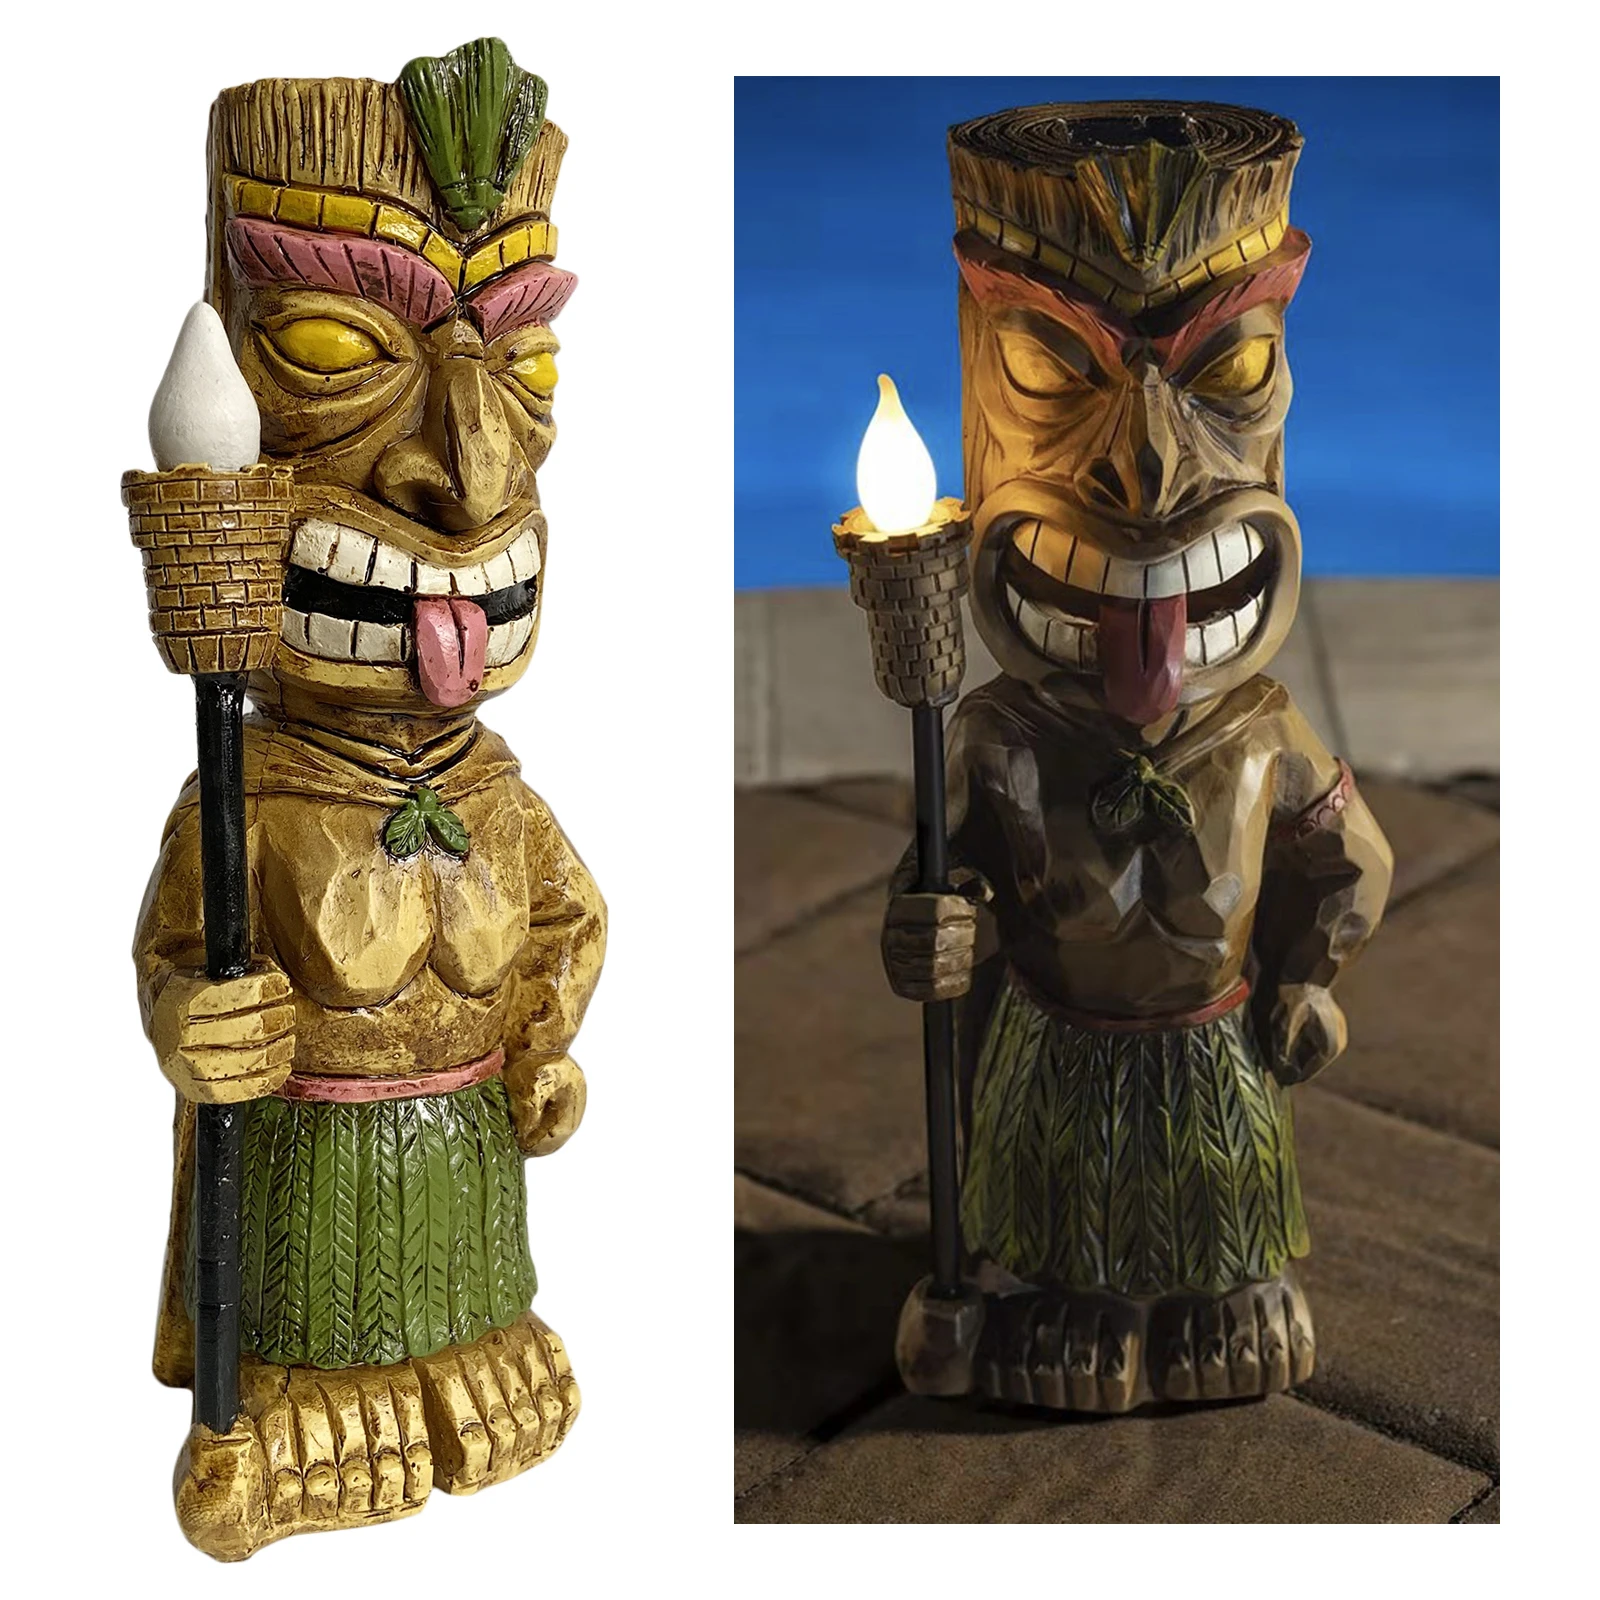 Tiki Solar Powered LED Decor Garden Light Maya Totem Figurine Ornaments